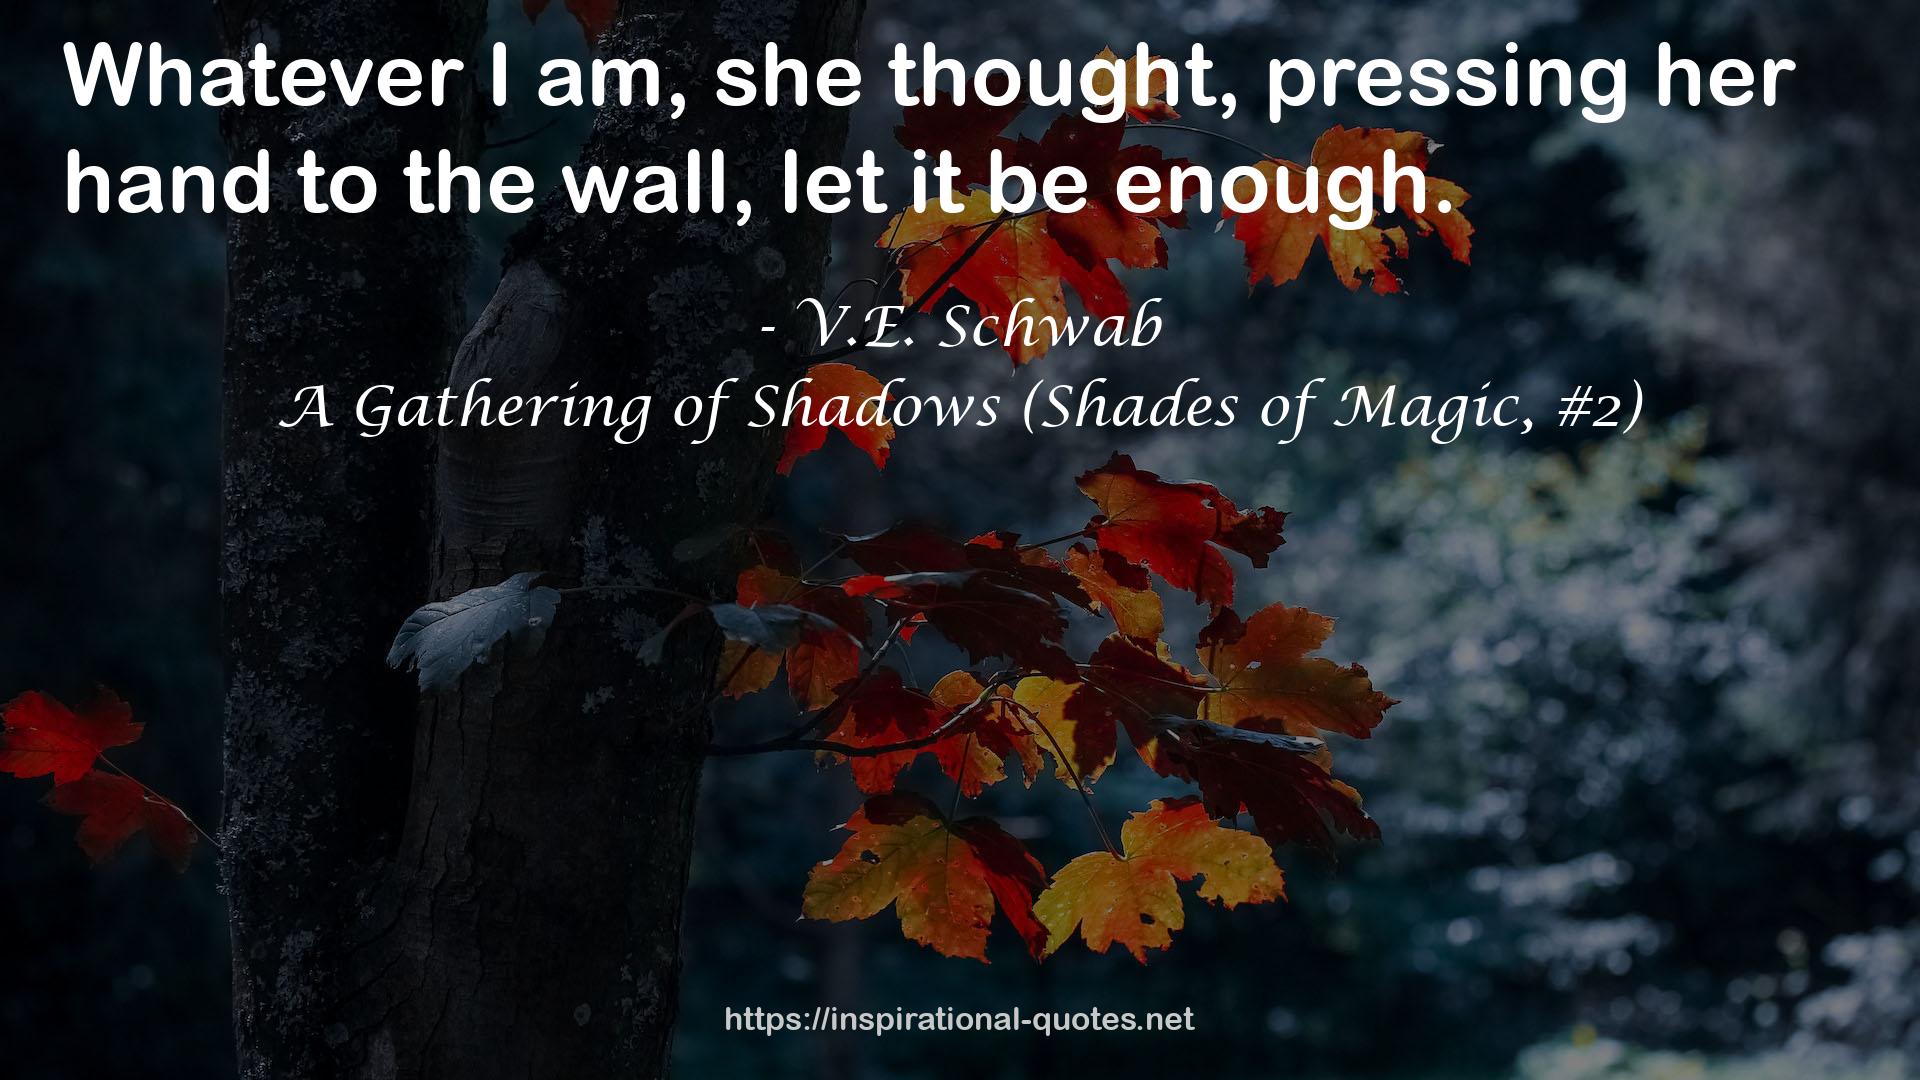 A Gathering of Shadows (Shades of Magic, #2) QUOTES